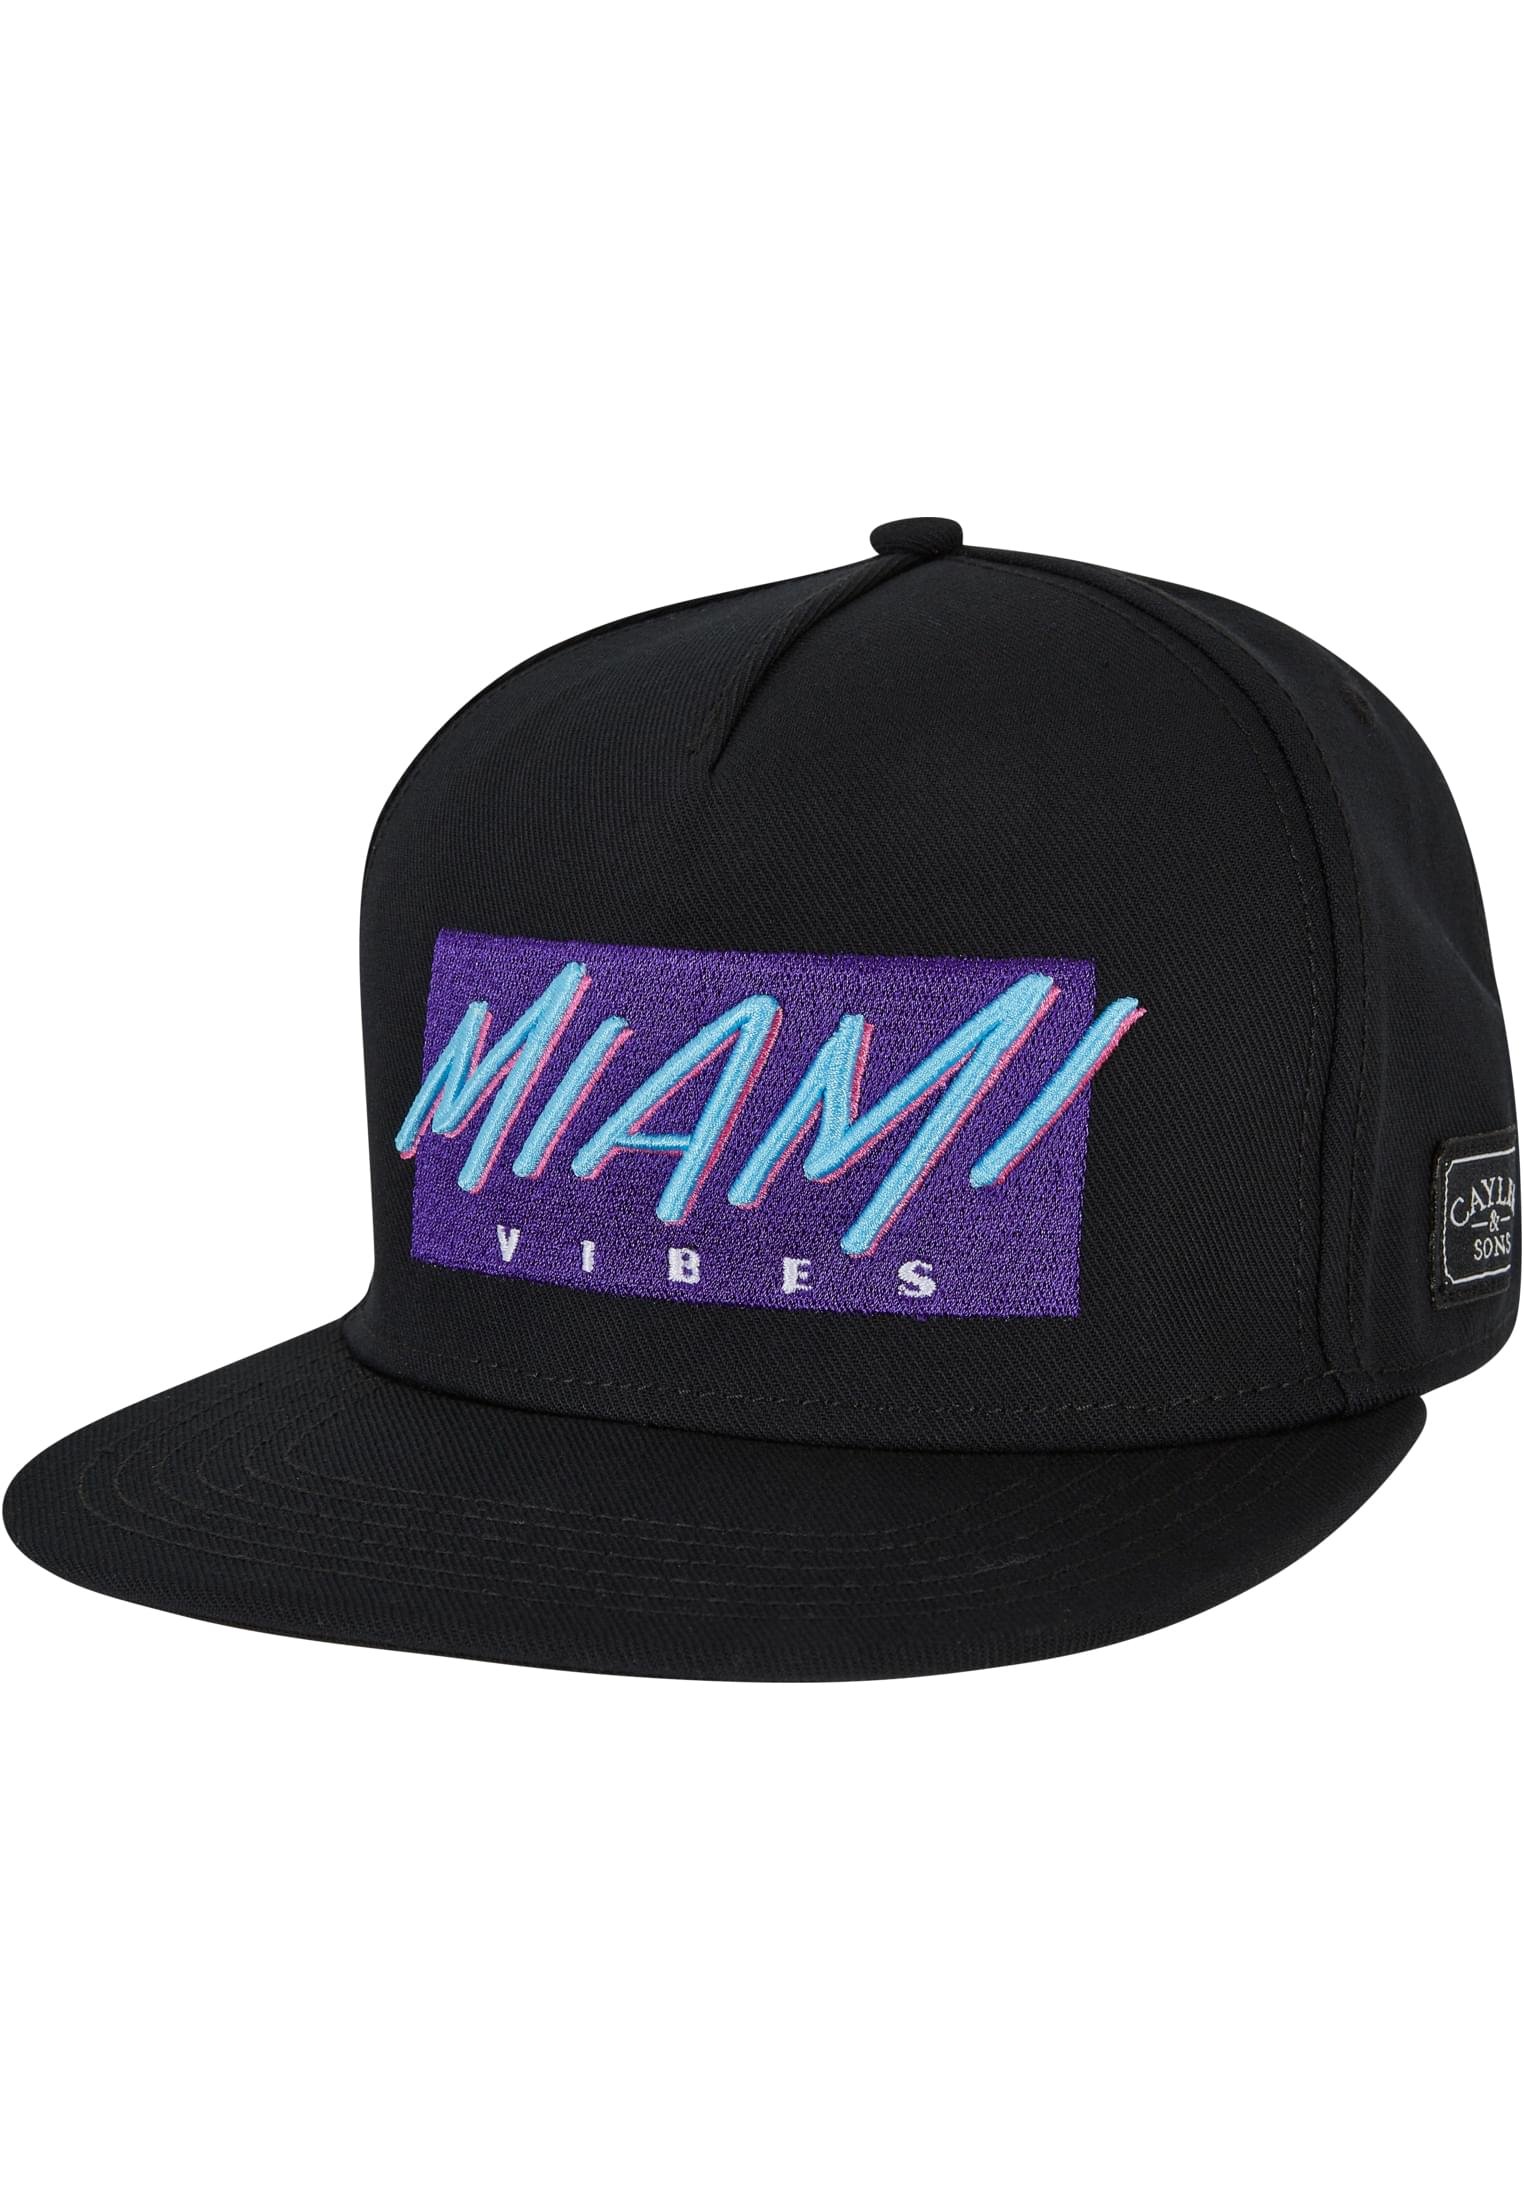 Miami Vibes P Cap black one size